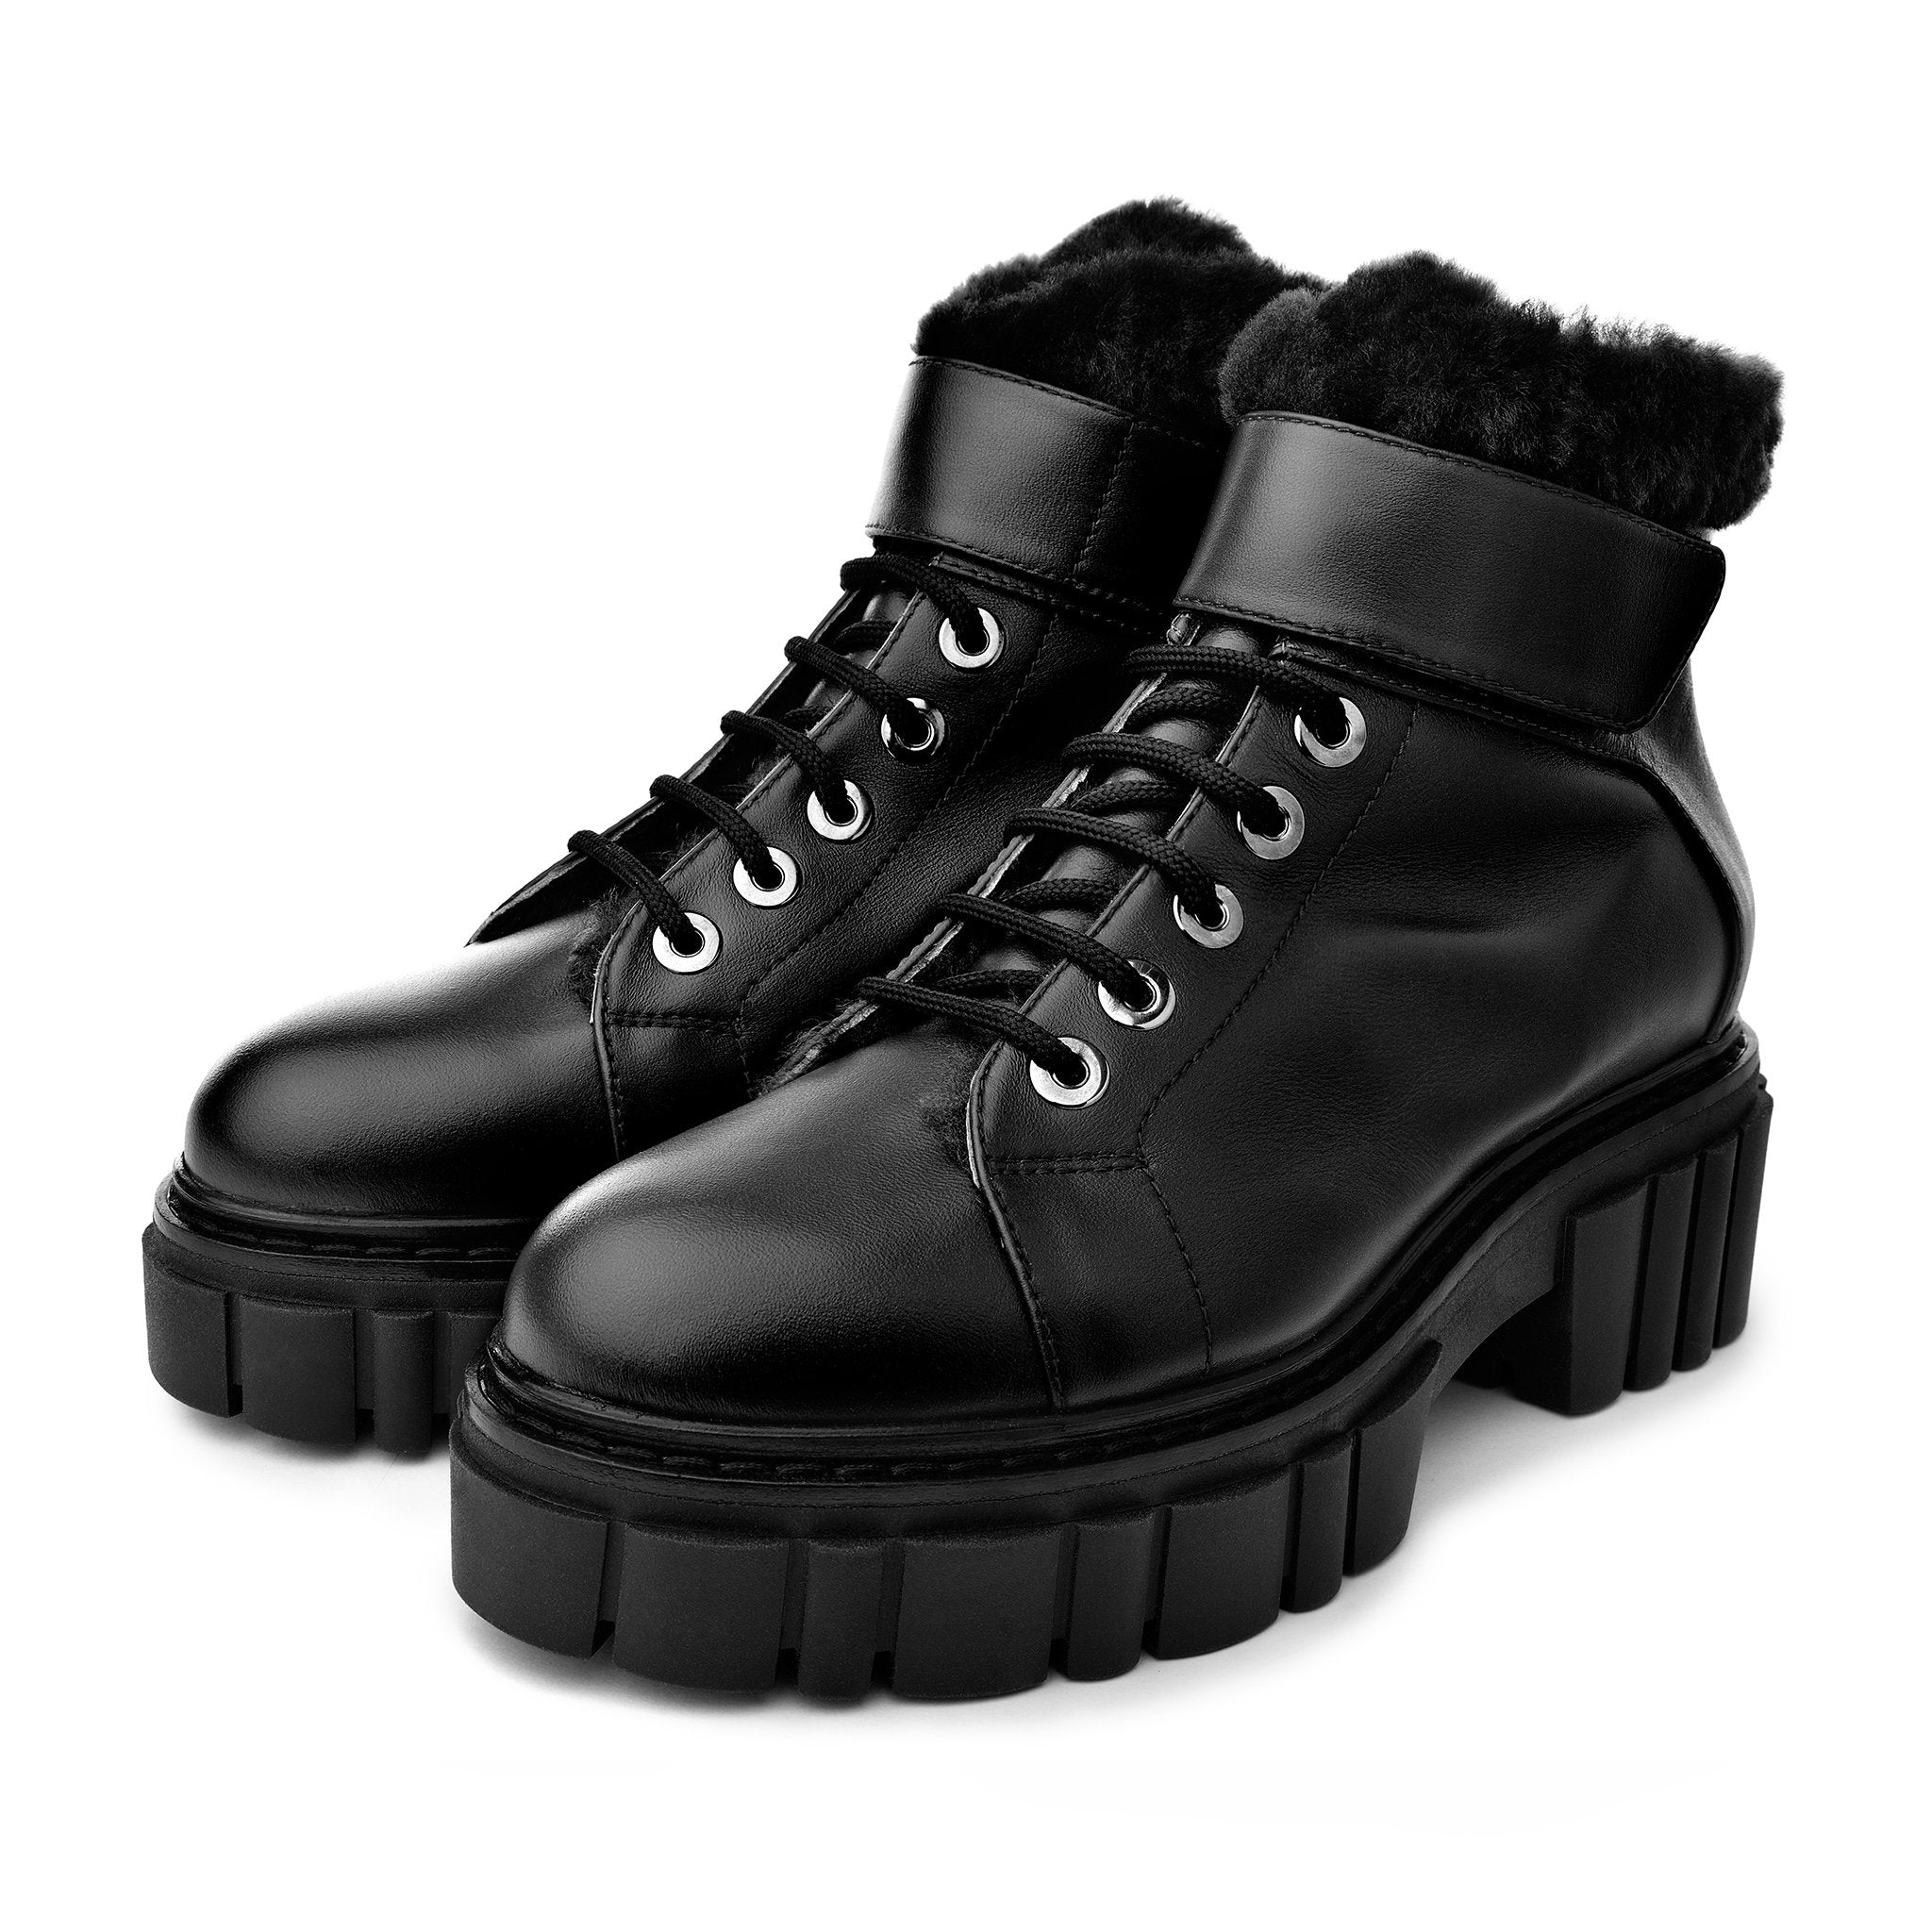 Takara Black Winter Ankle Boots 2030-01 - 4